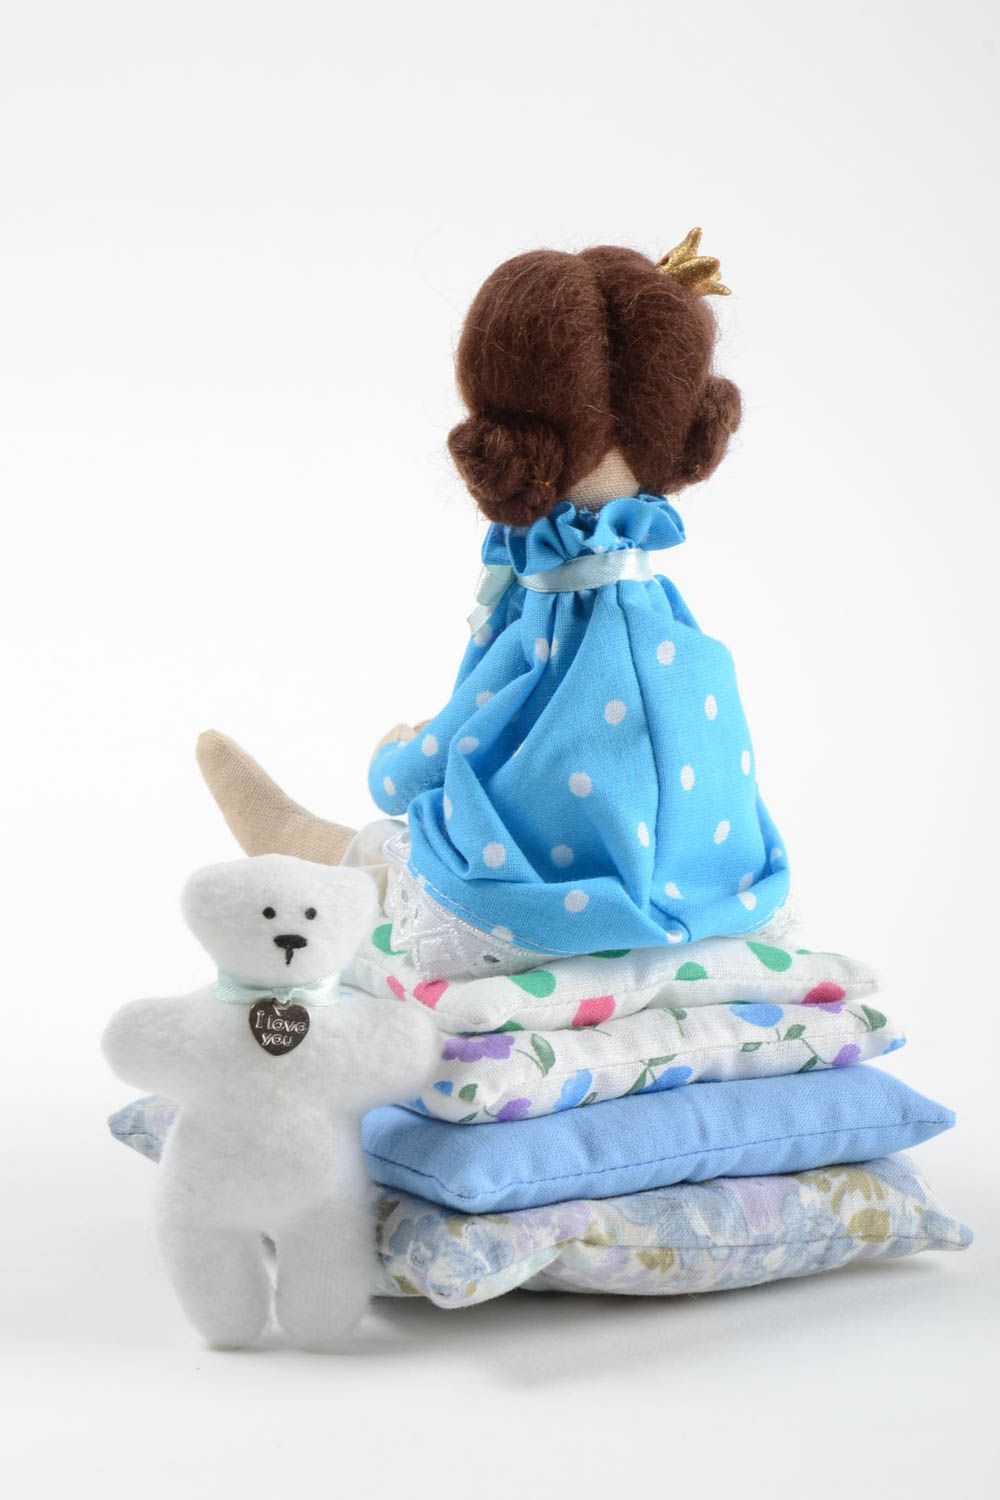 Decorative handmade fabric doll soft rag doll stuffed toy for decor home designs photo 4